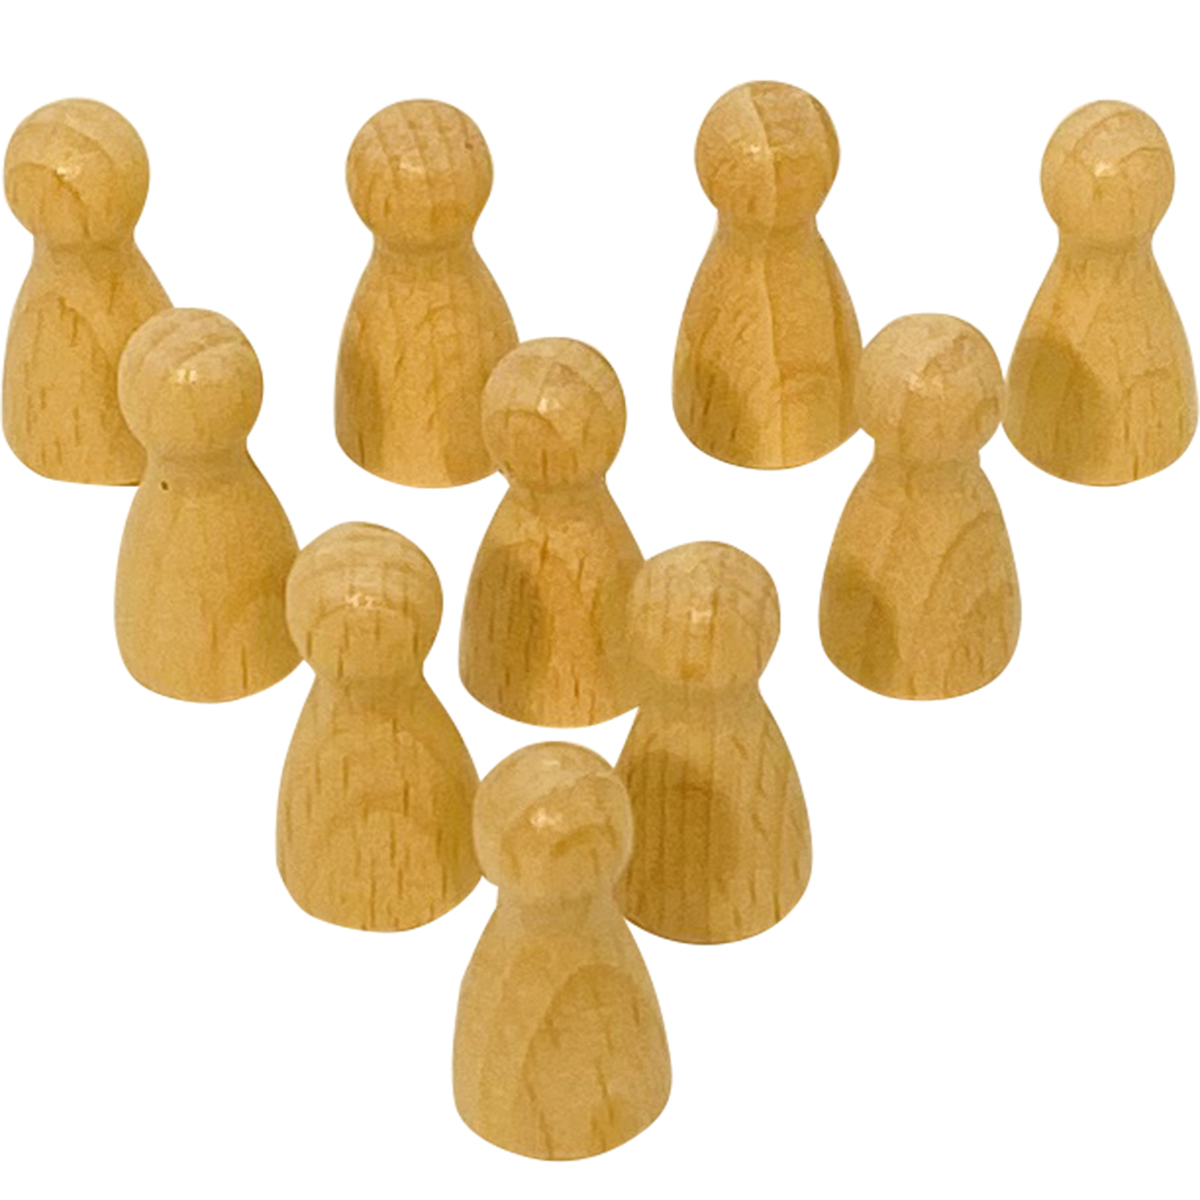 10er Pack Halmakegel Spielkegel sortenrein aus Holz poliert 24x12 mm (Natur poliert)- 2172